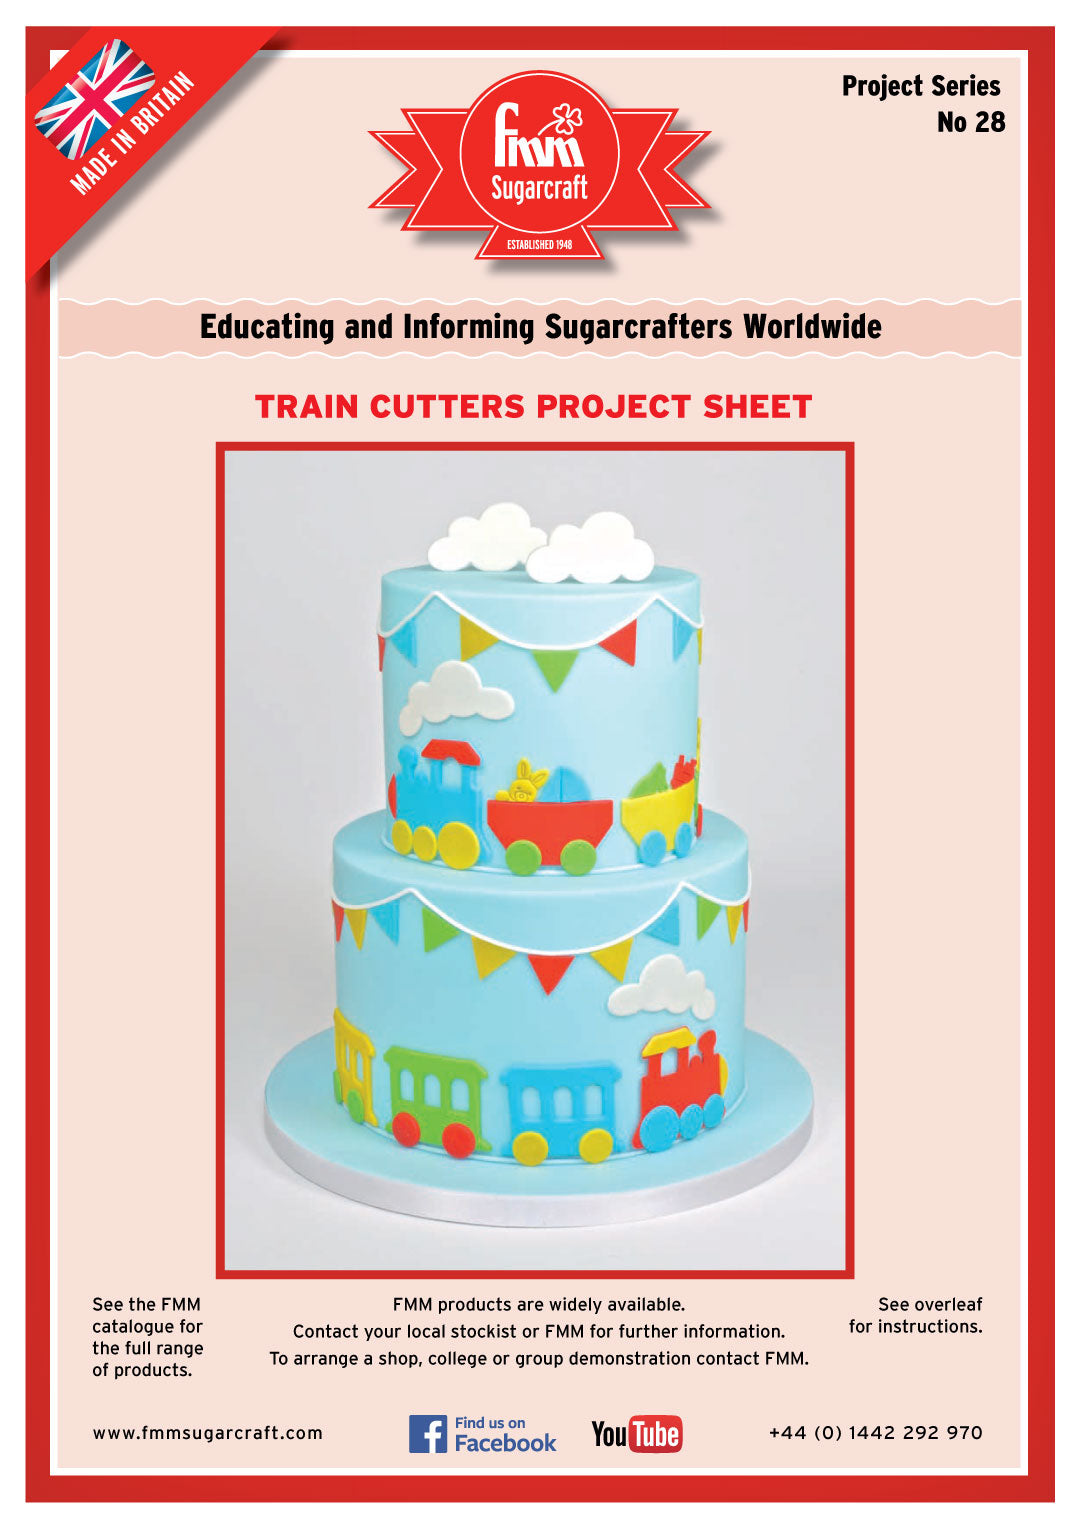 FMM Train Cake Project Sheet